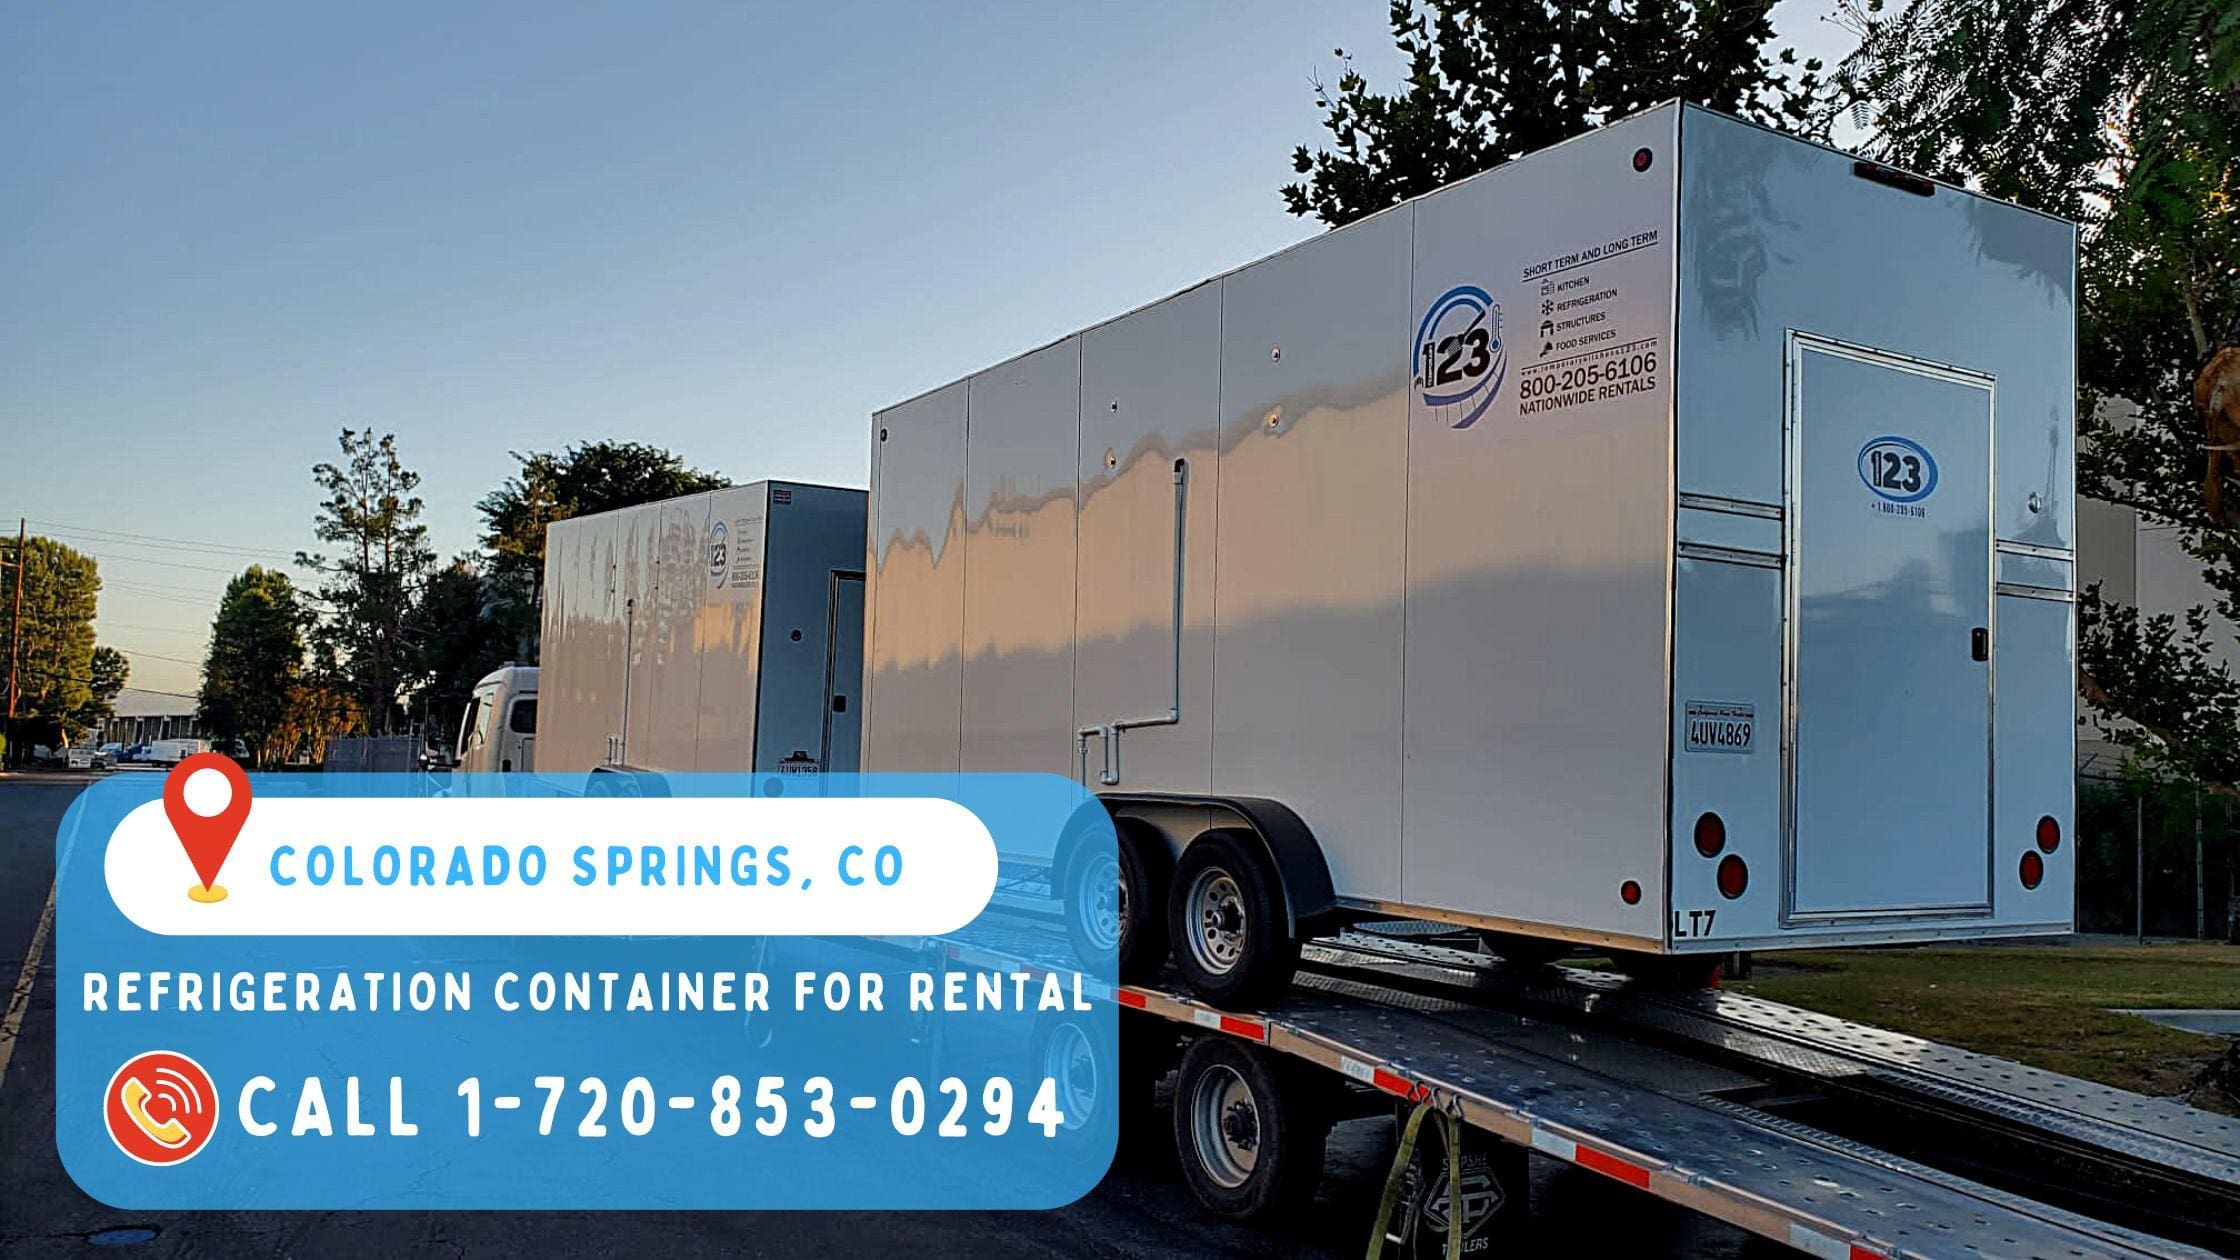 Refrigeration Container for rental Colorado Springs